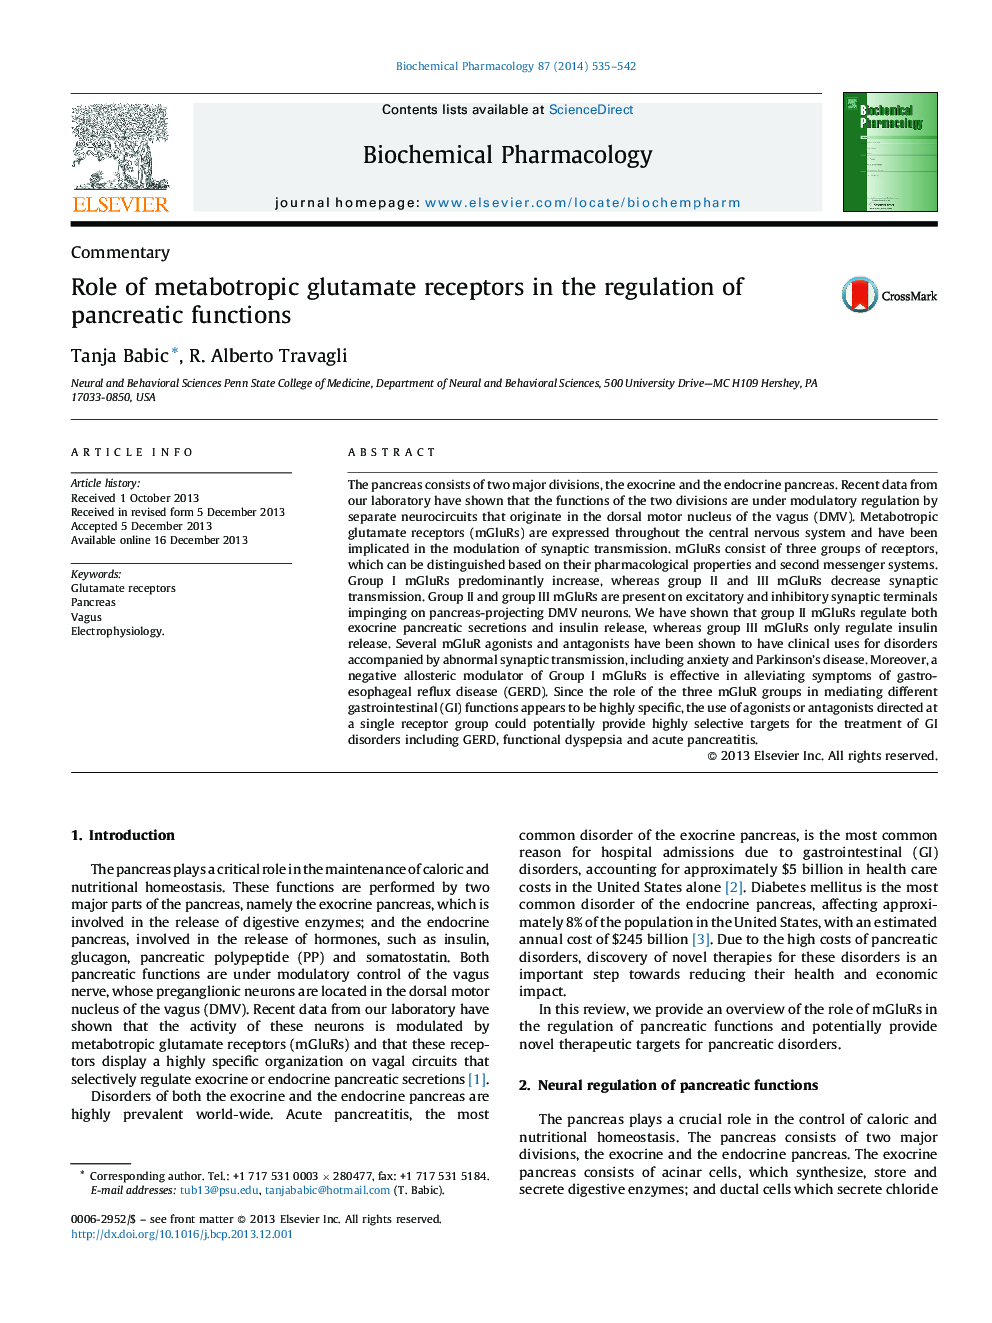 Role of metabotropic glutamate receptors in the regulation of pancreatic functions